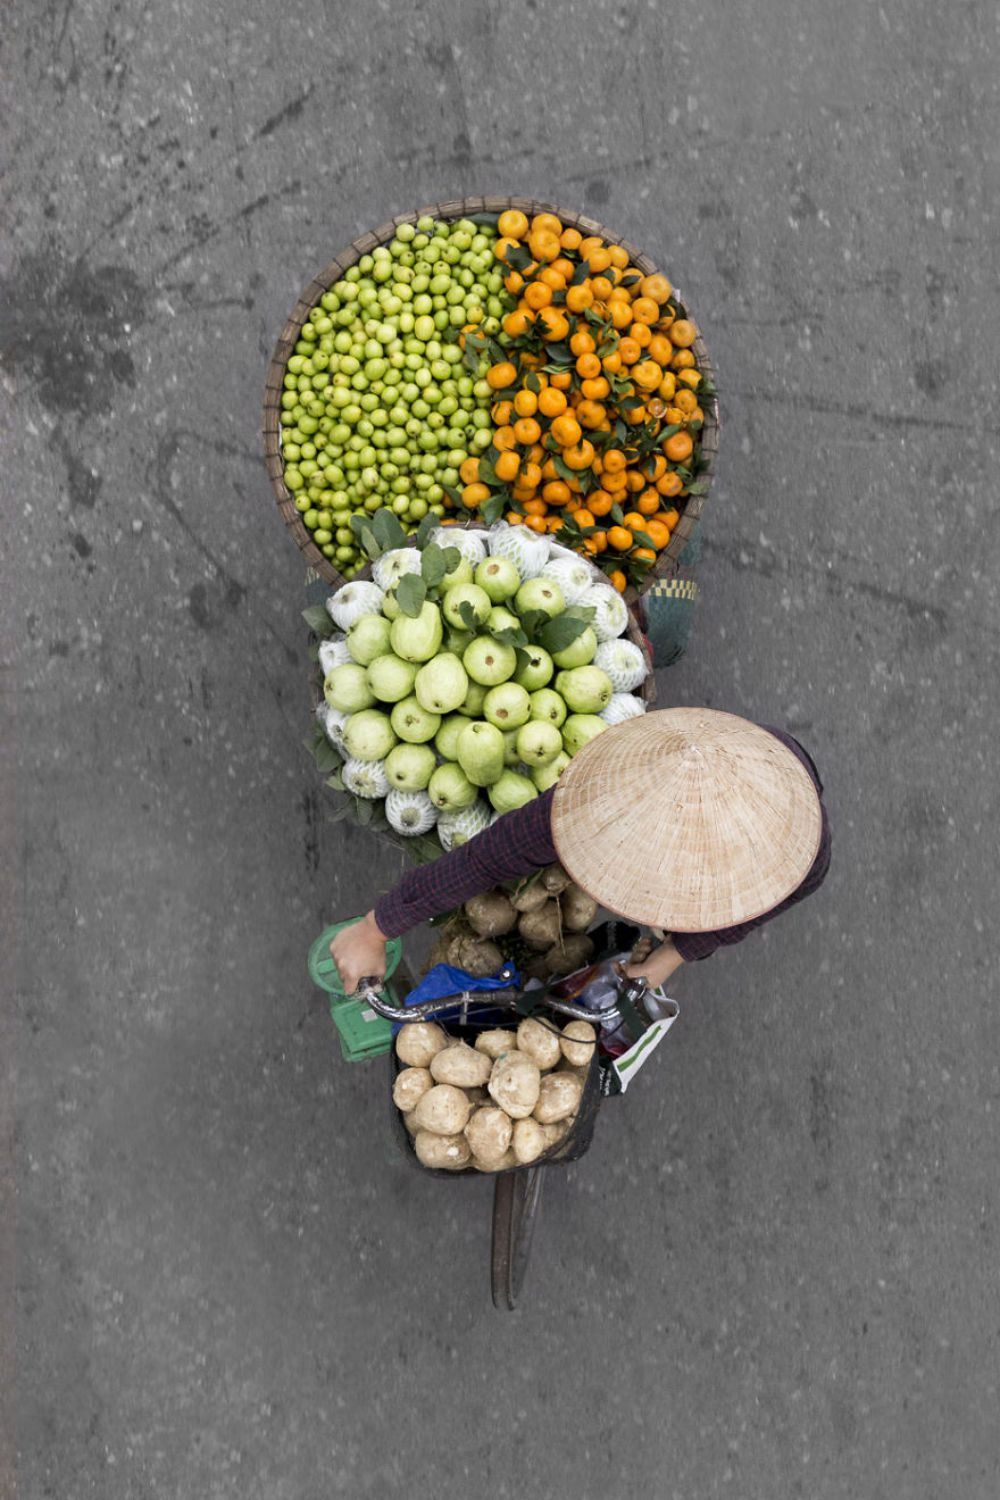 Merchants in Motion: wonderful photography series on Vietnam’s street vendors by Loes Heerink